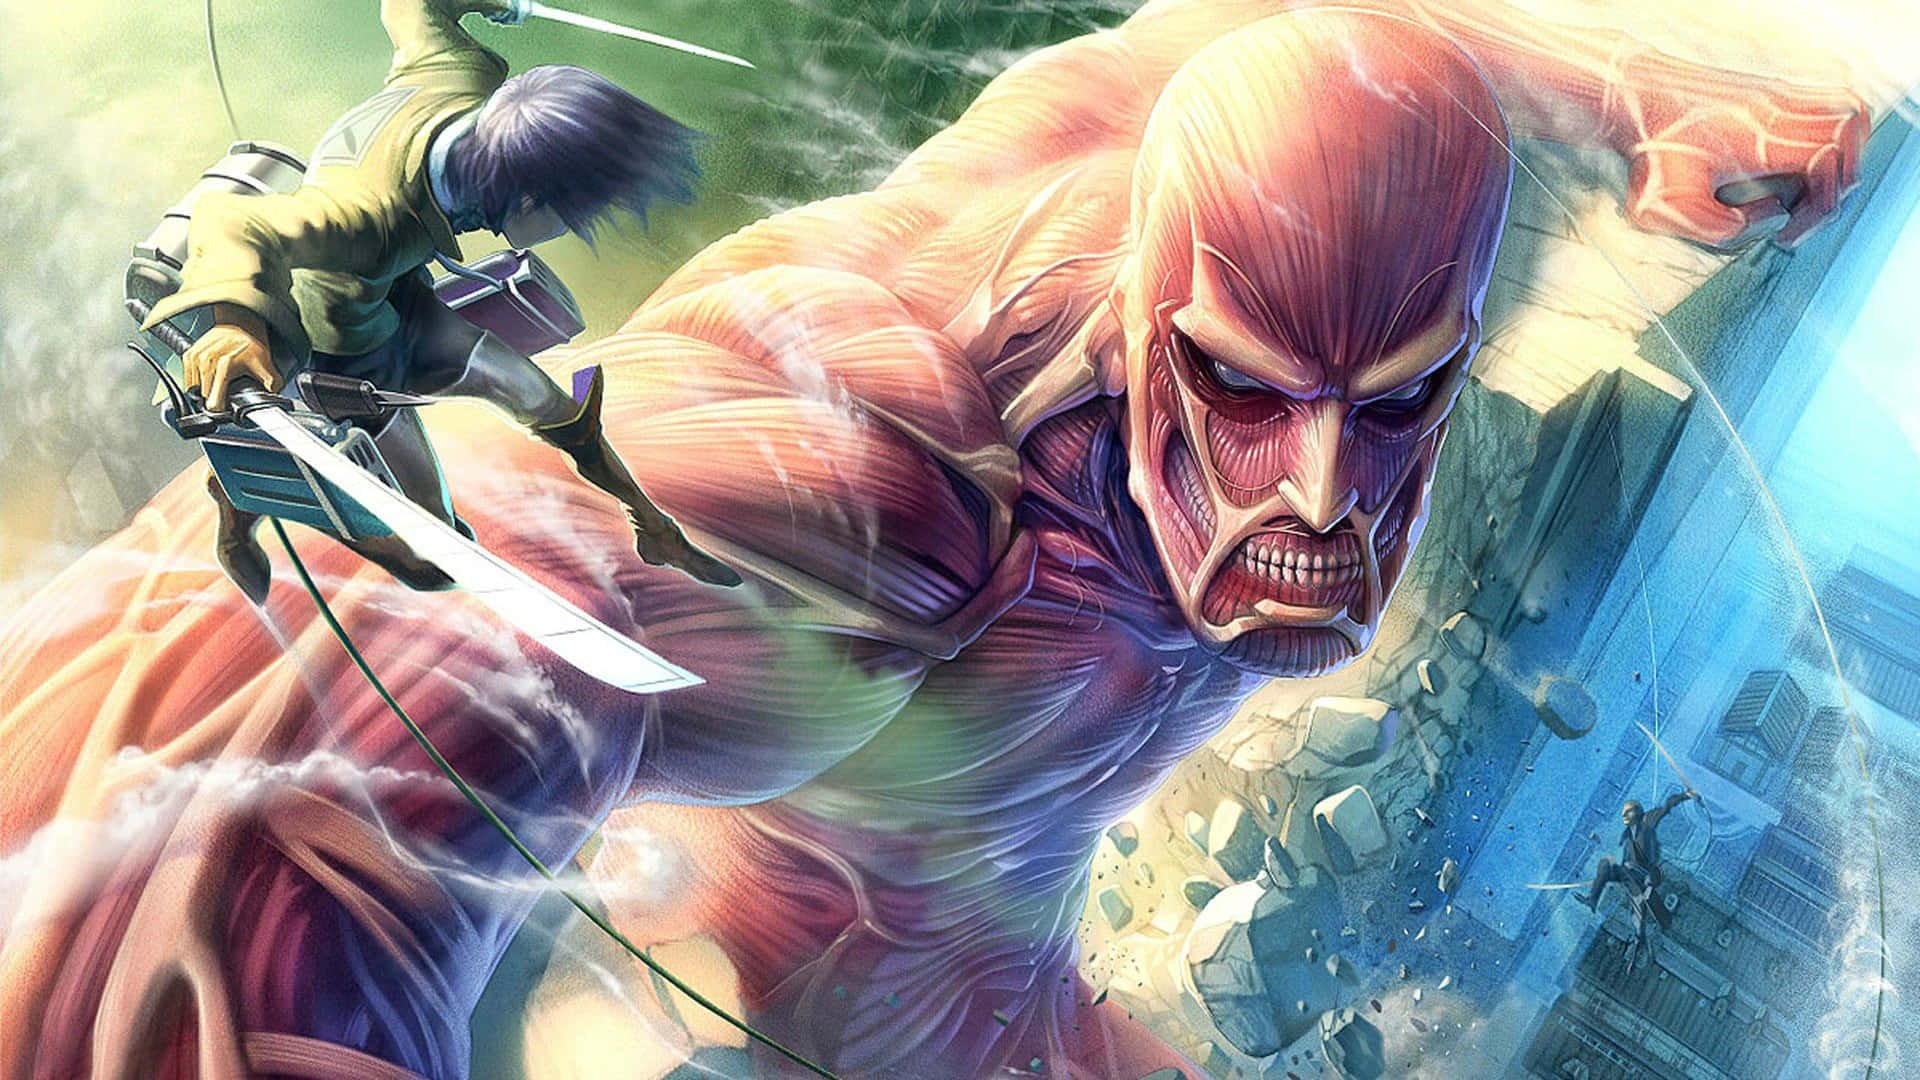 “Titan Eren unleashes his incredible power.” Wallpaper